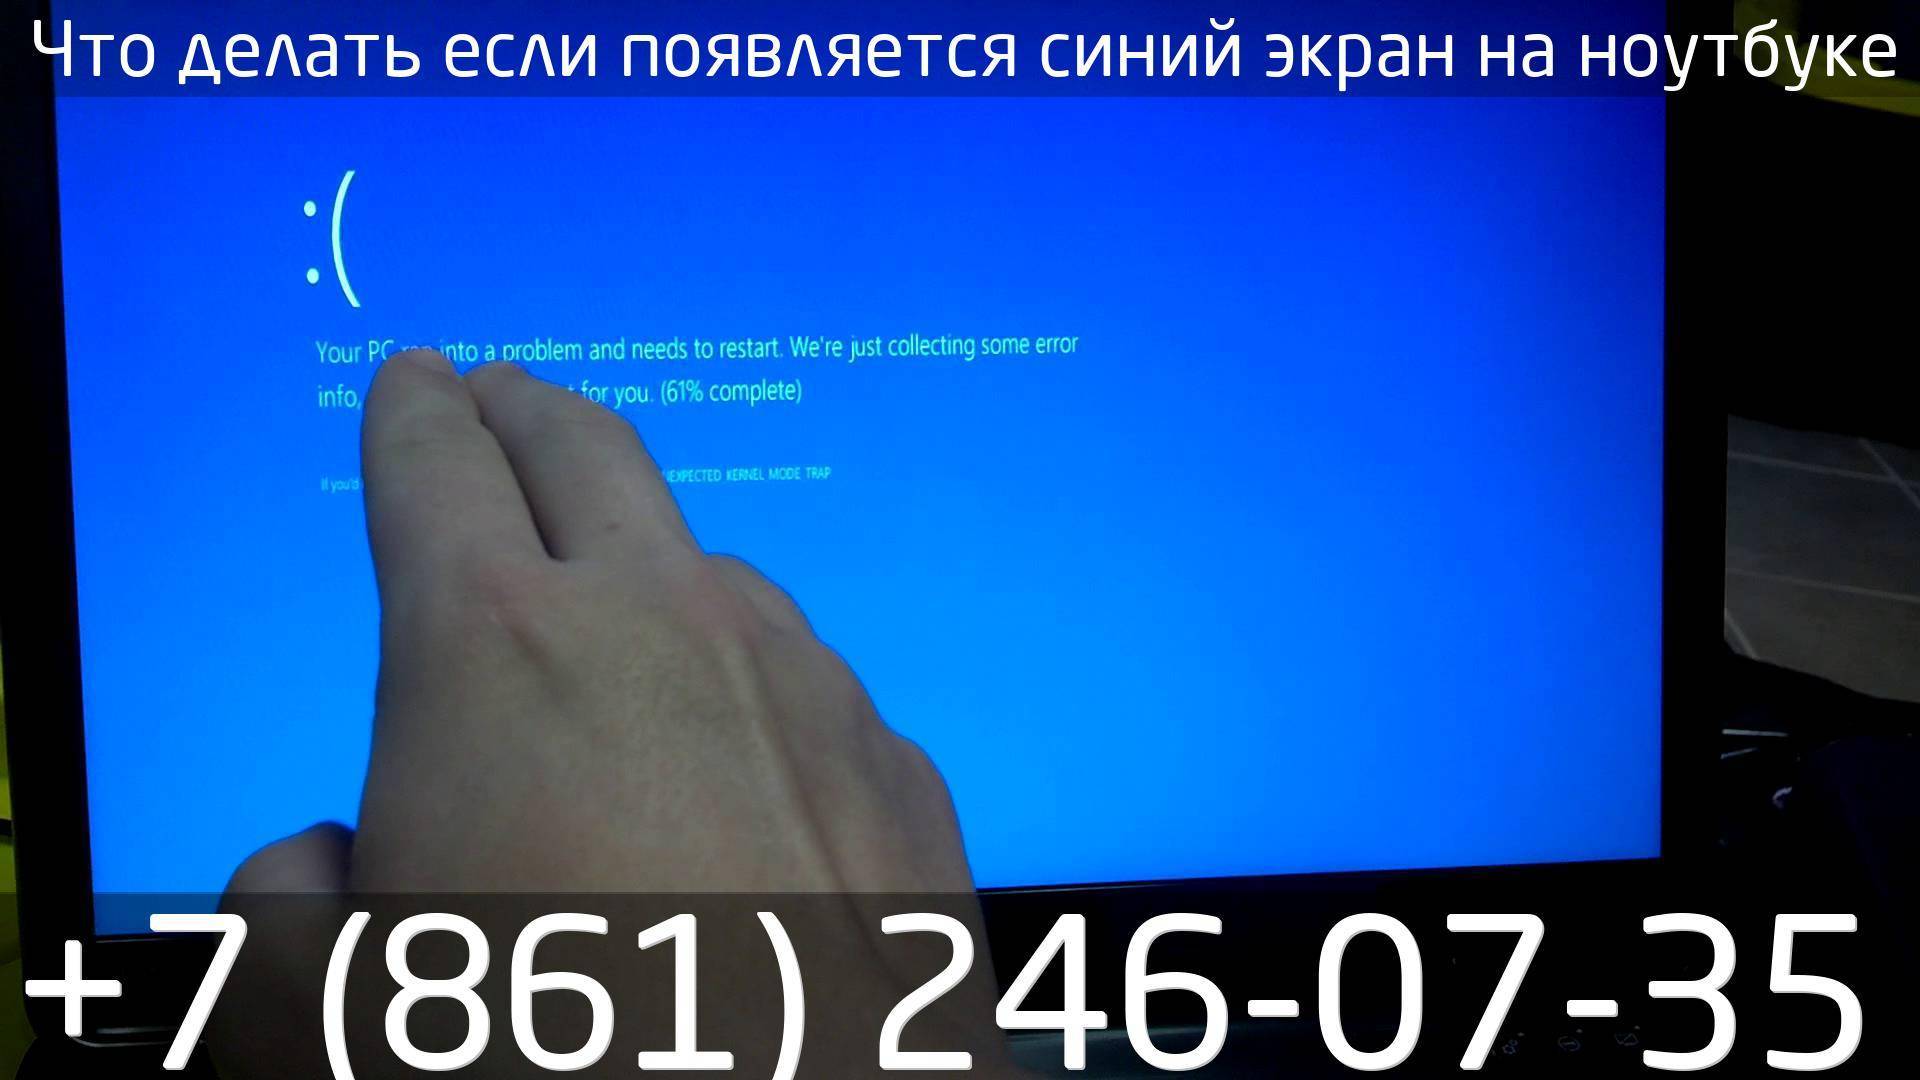 Синий экран при включении компьютера (ноутбука) без надписей